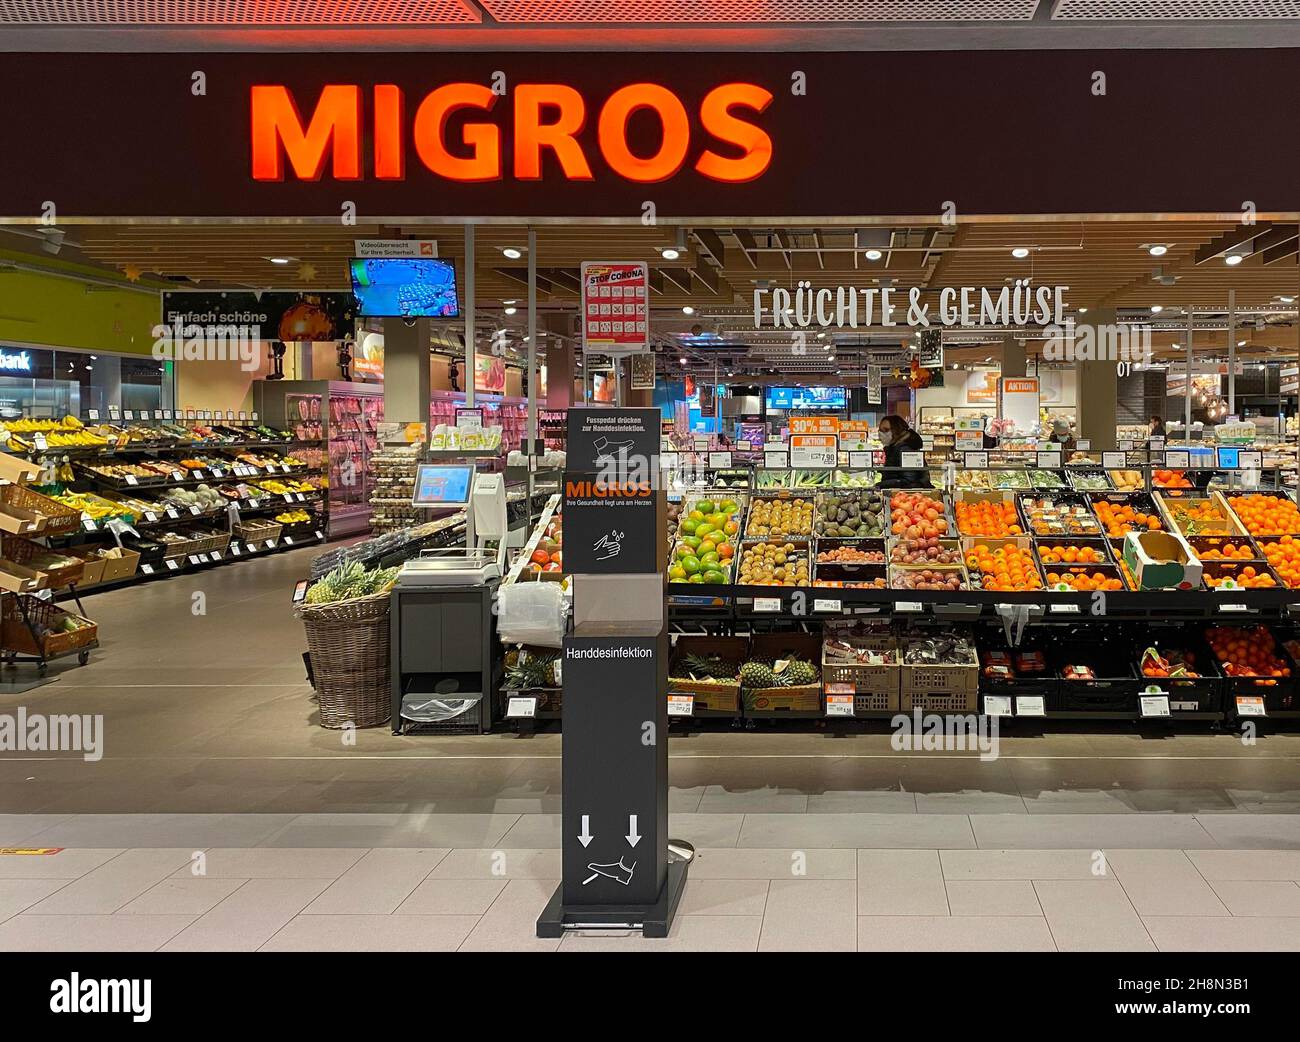 Migros Fruit and Vegetables, Switzerland Stock Photo - Alamy